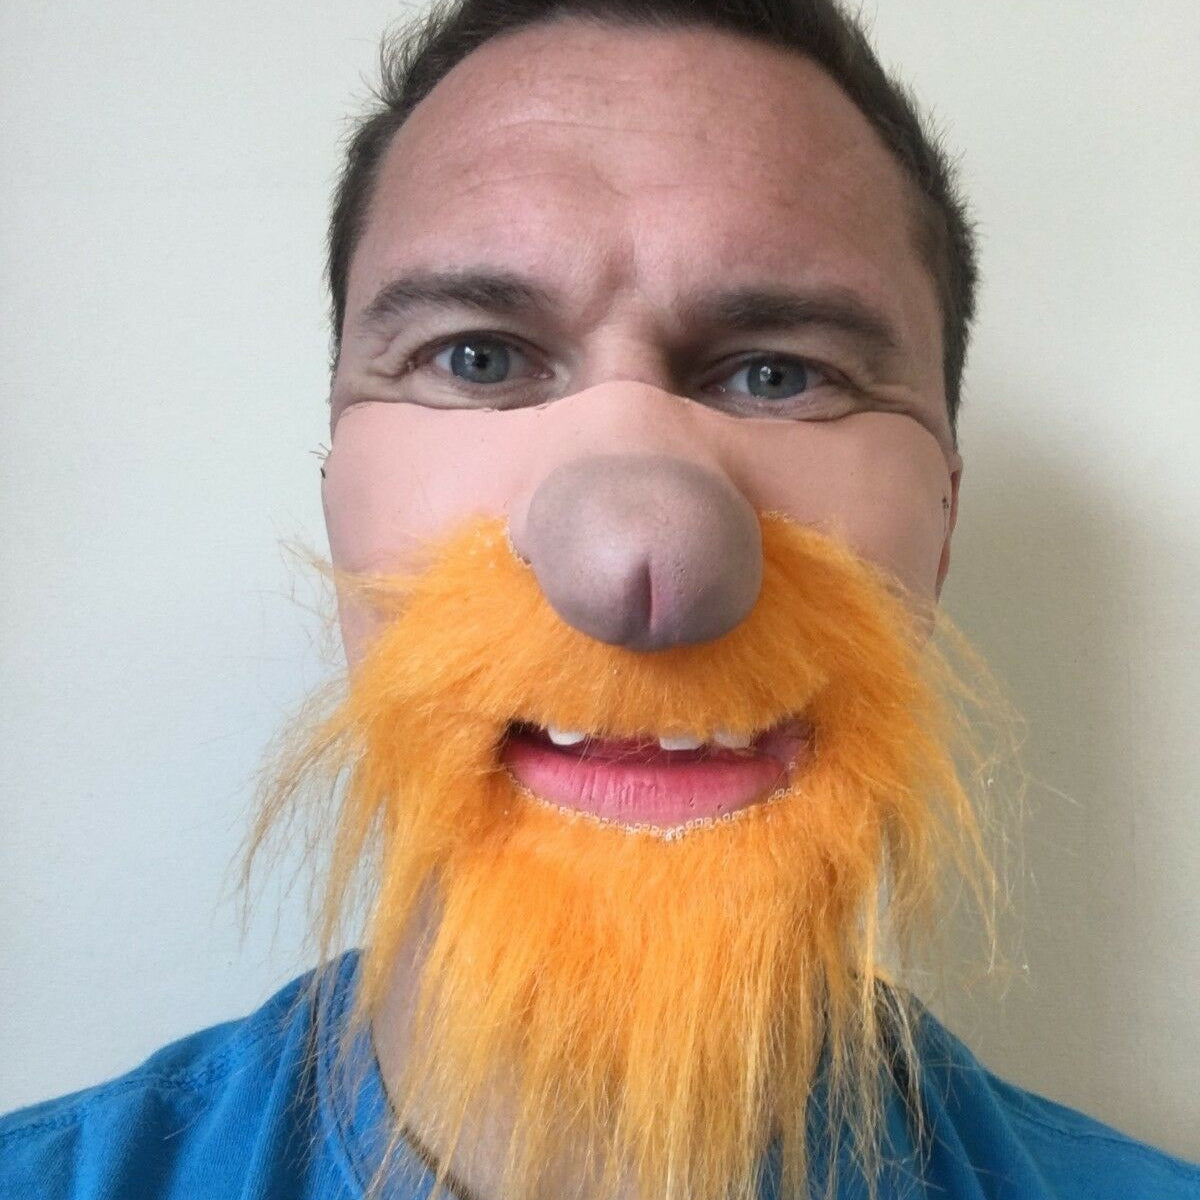 Ginger Dick Nose Mask